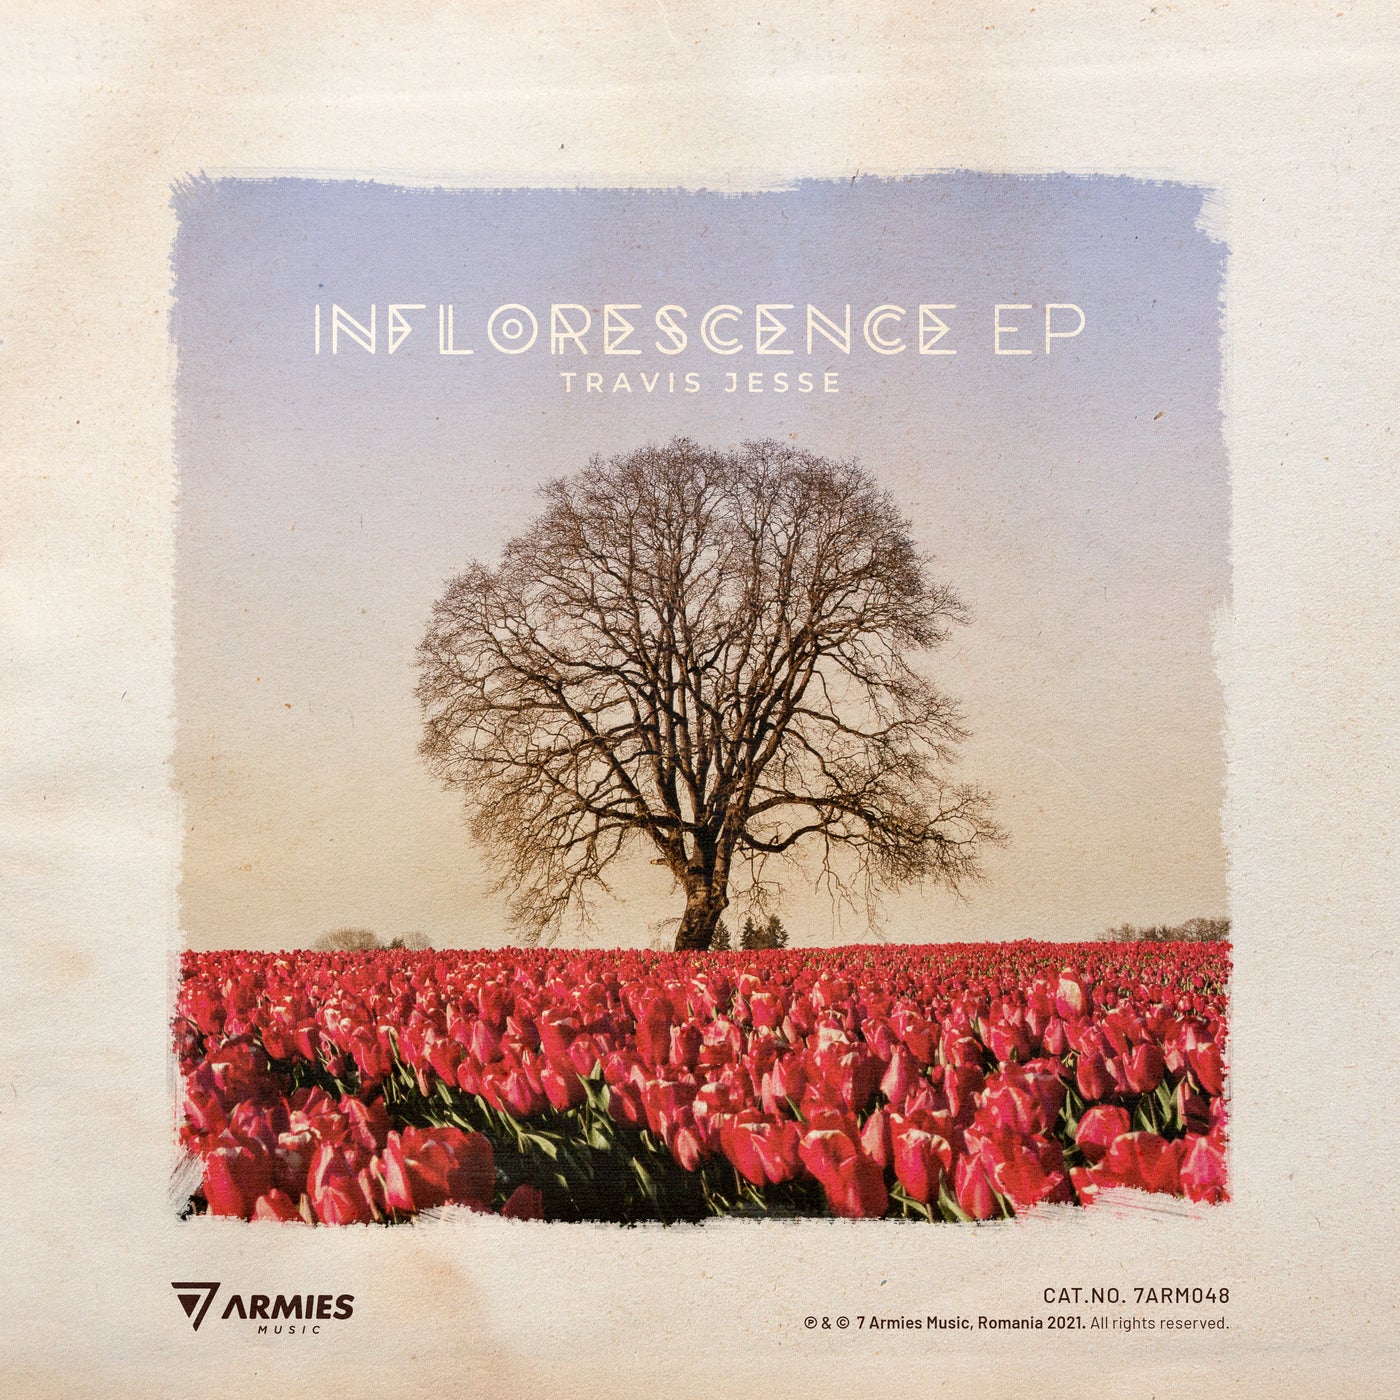 Travis Jesse – Inflorescence EP [7ARM048]